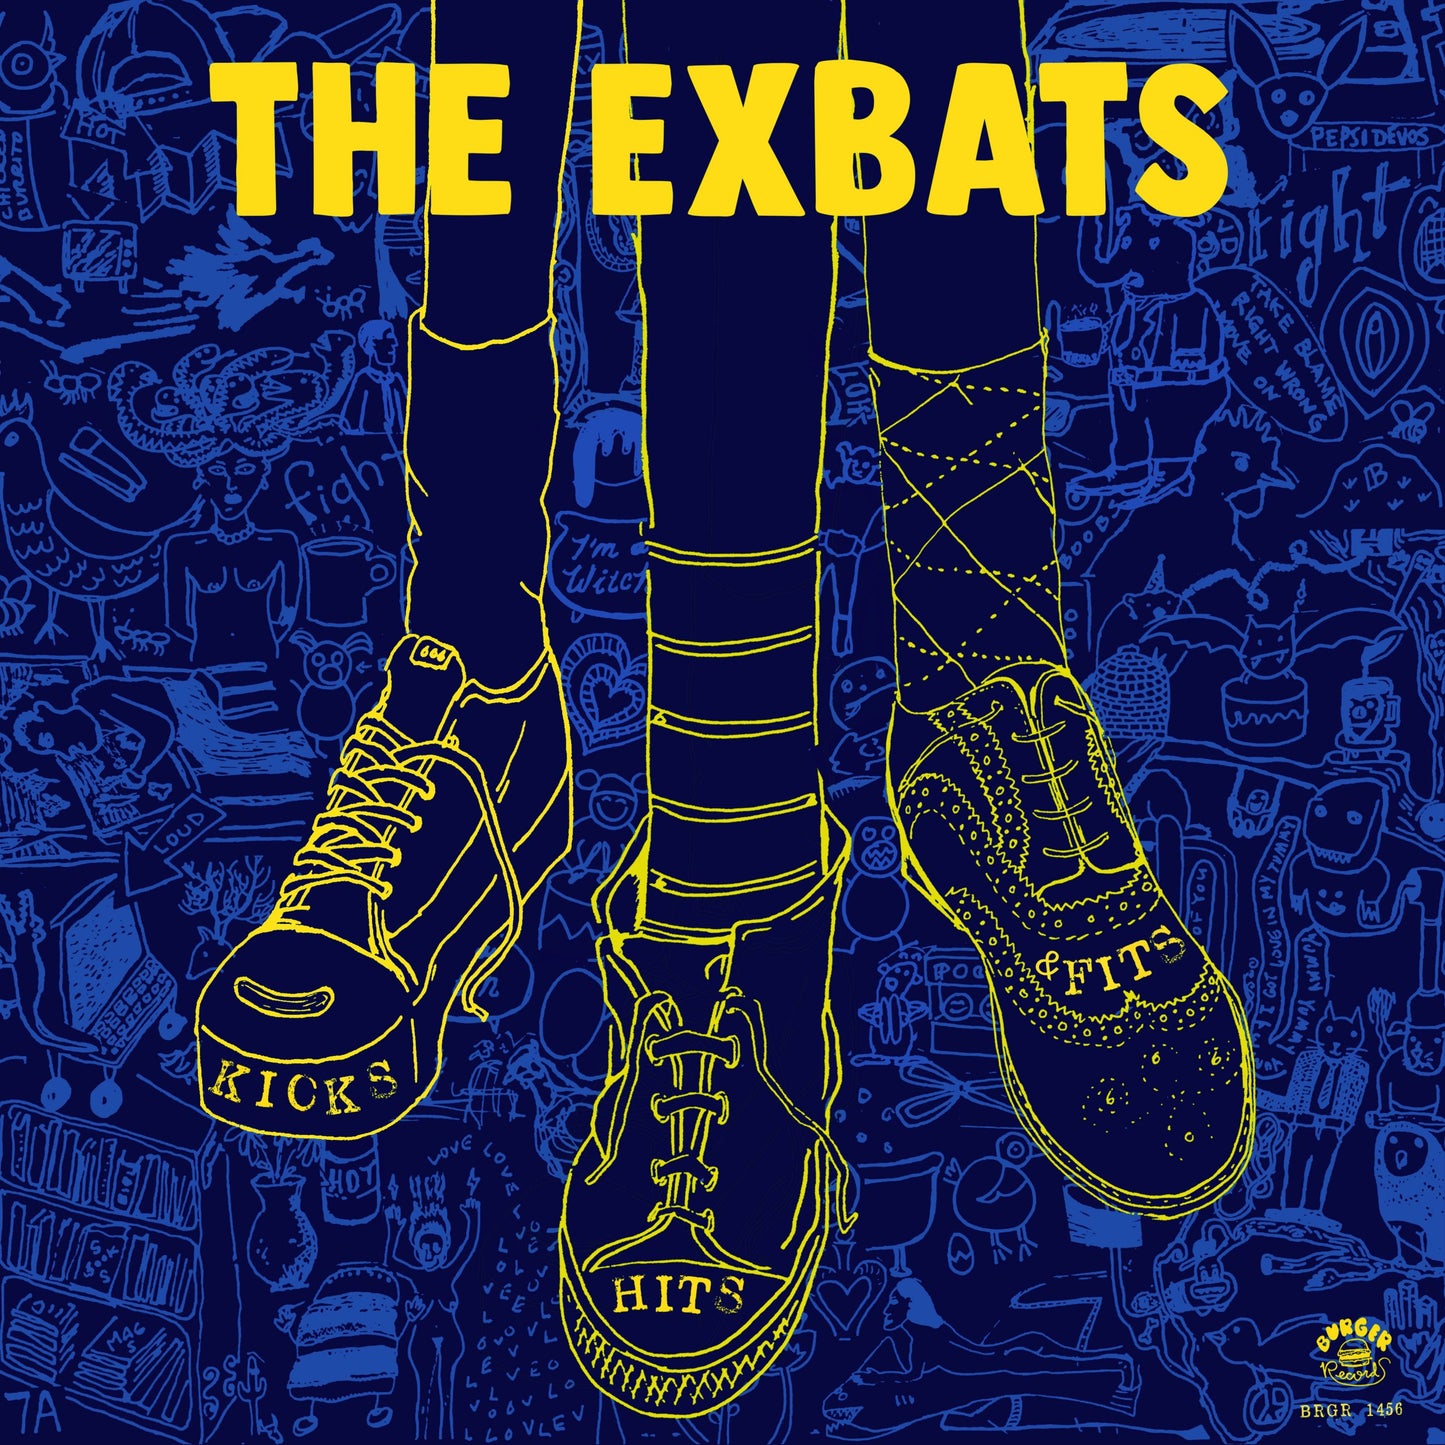 The Exbats - Kicks, Hits and Fits - CD